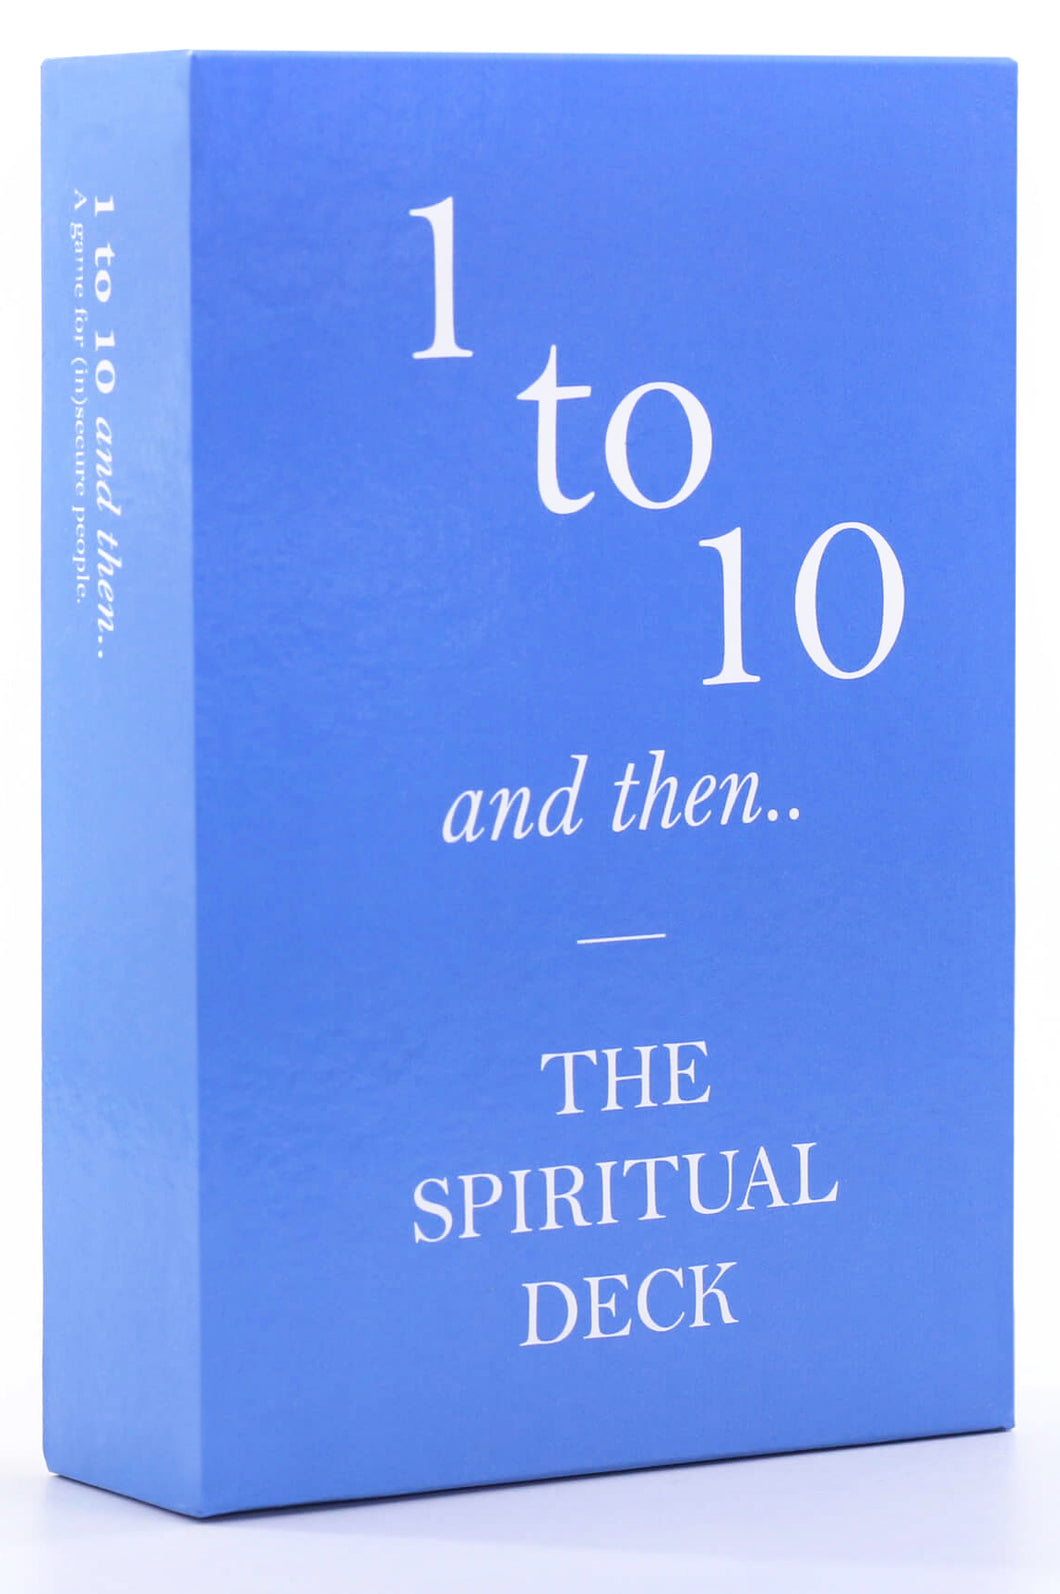 The Spiritual Deck